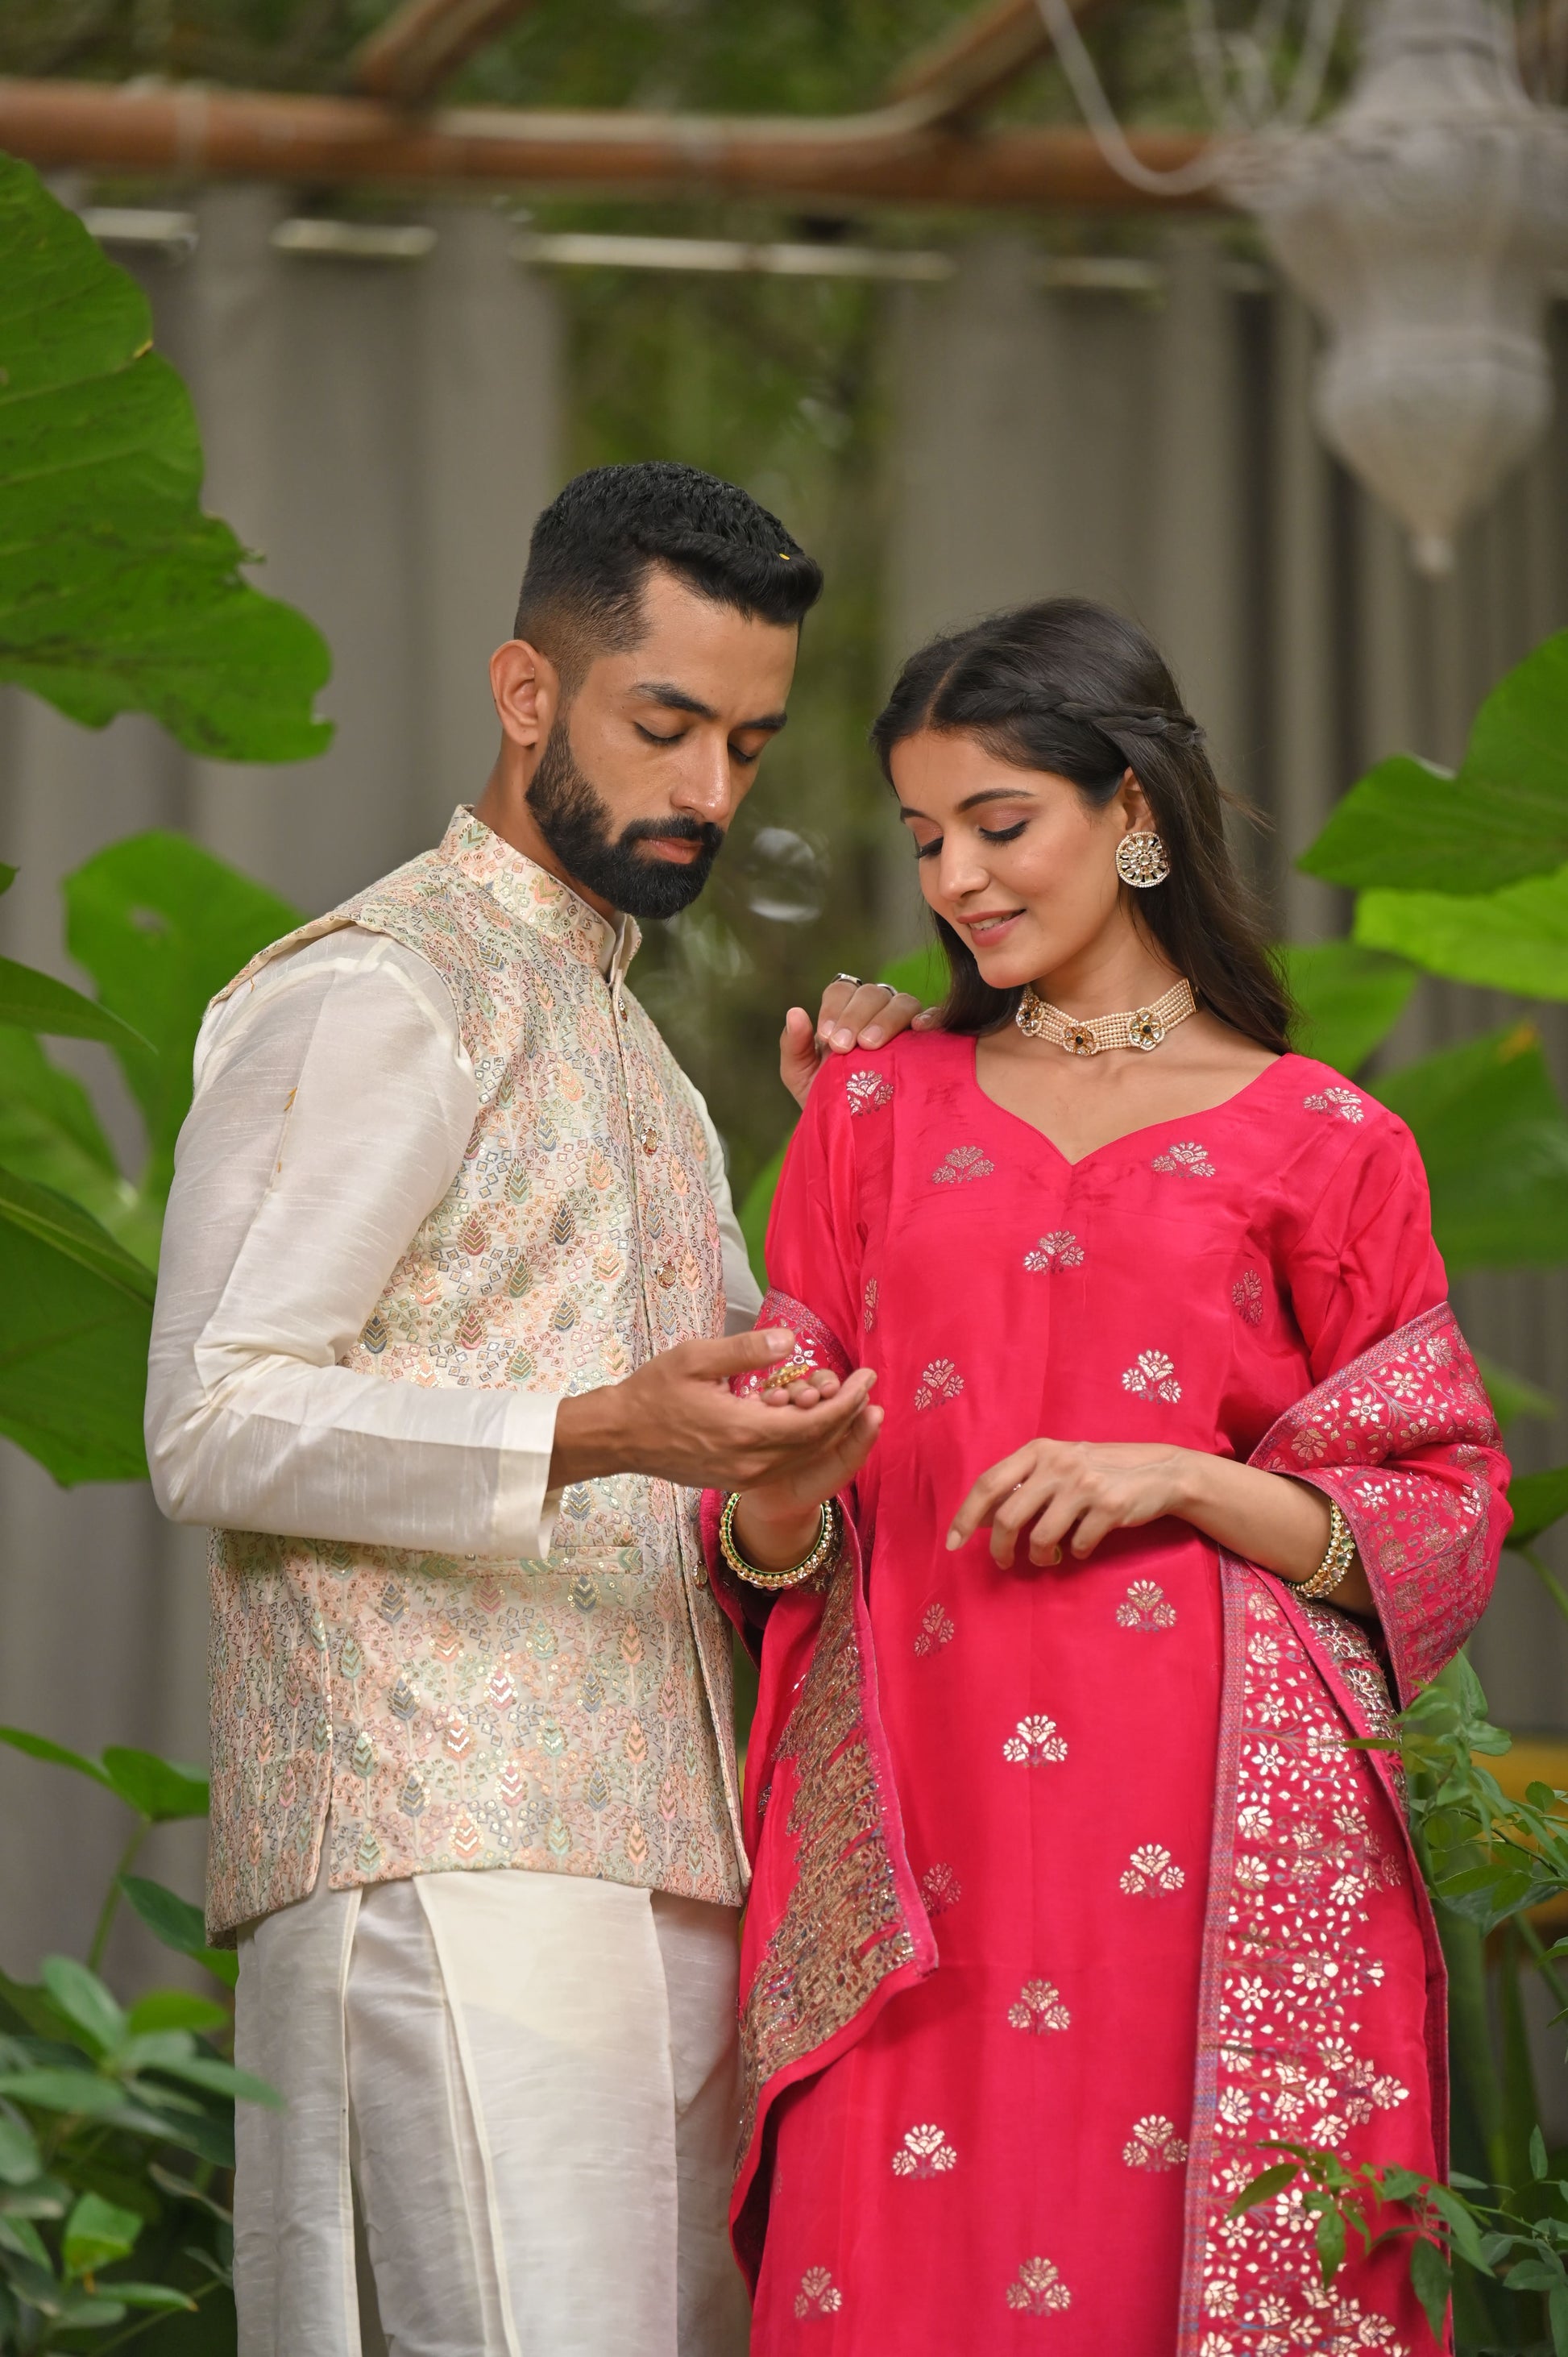 Buy Couple Wedding Dress & Matching Dress For Couple Indian - Apella